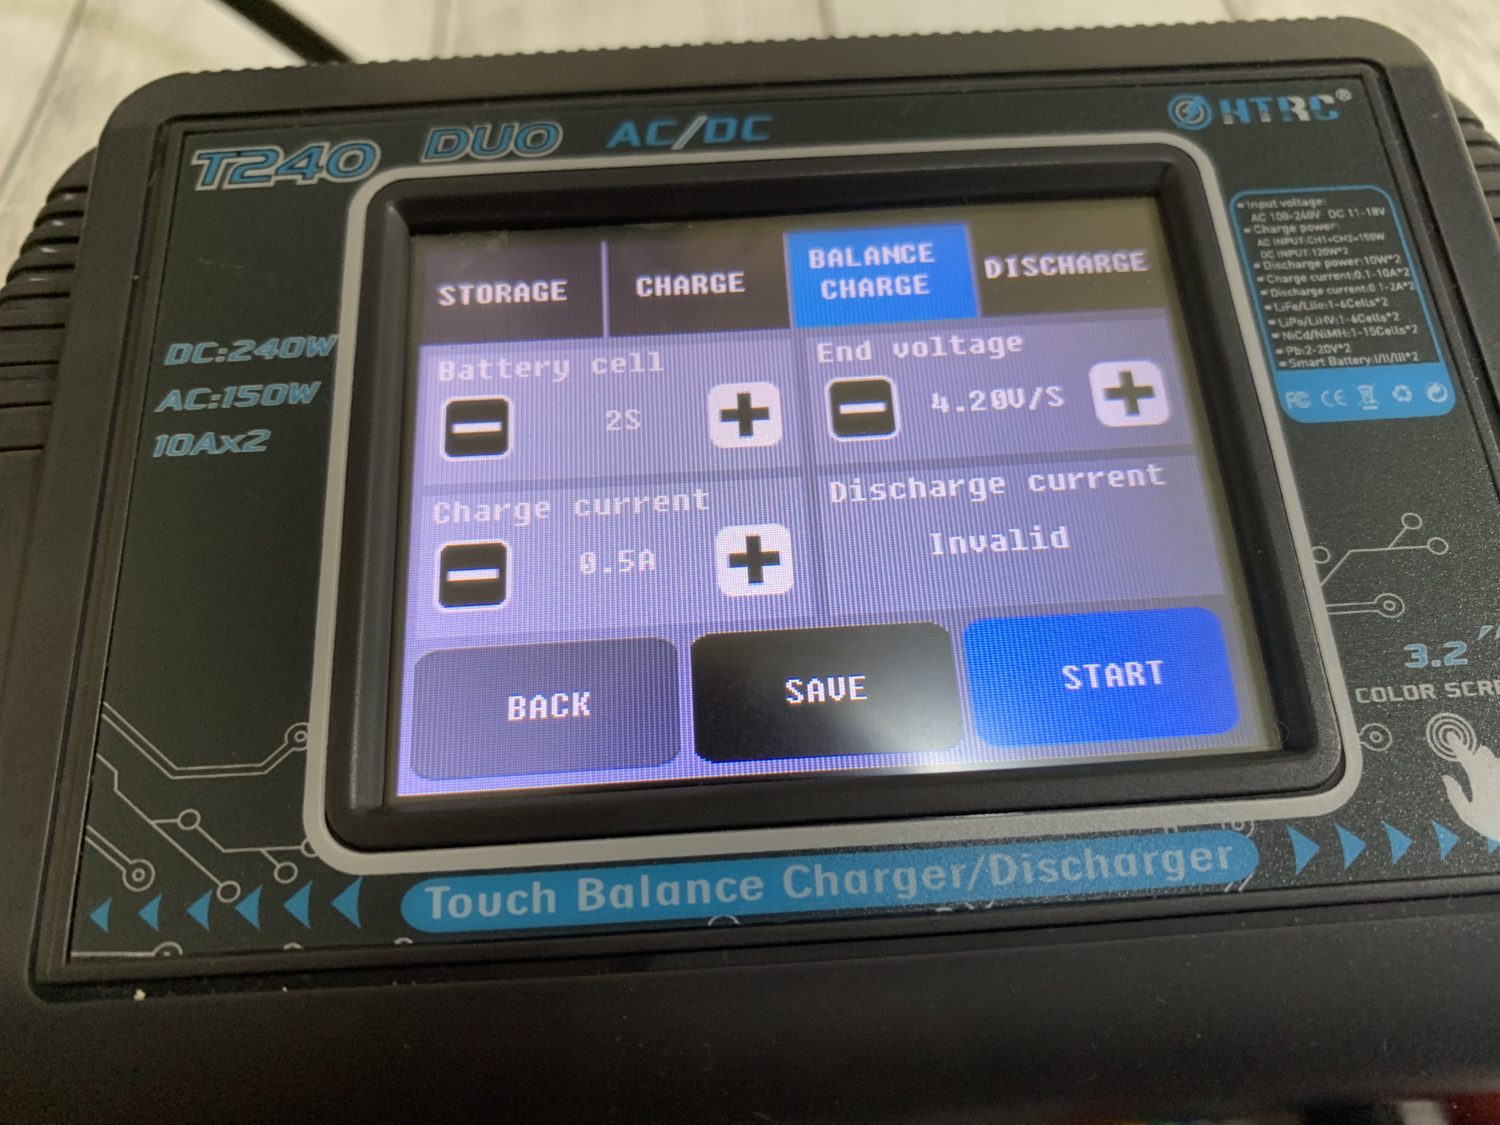 HTRC T240 Duo リポバッテリー 充電器 レビュー【バランス機能付き】